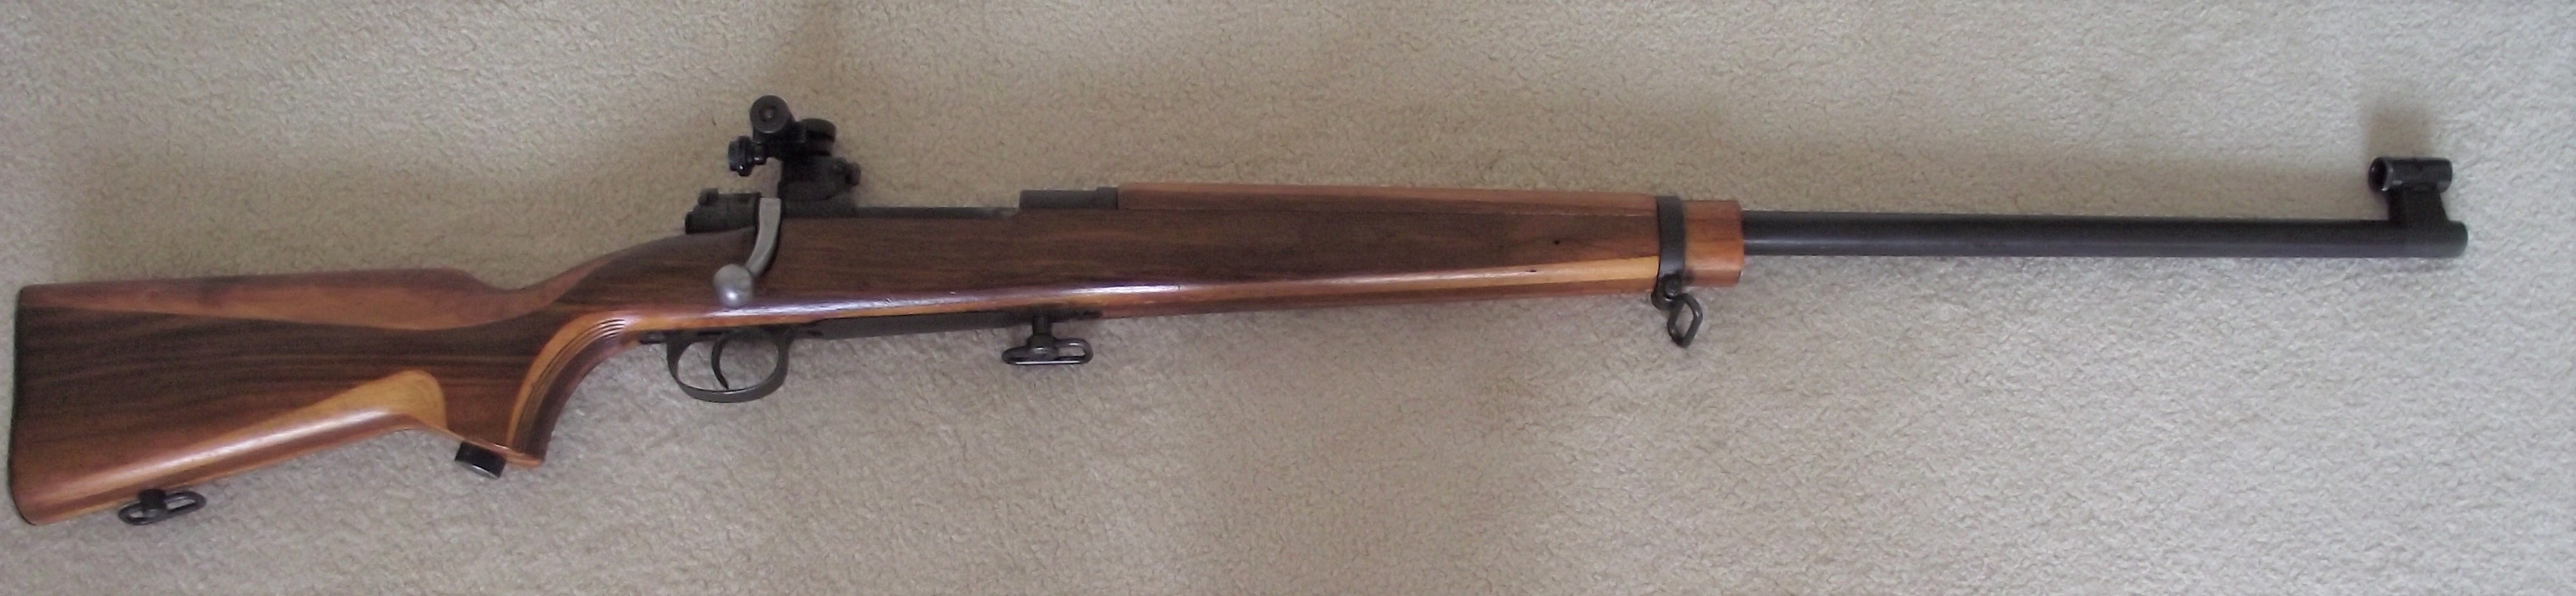 ./guns/rifle/bilder/Rifle-Kongsberg-Mauser-M59F1-GB00072-1.JPG